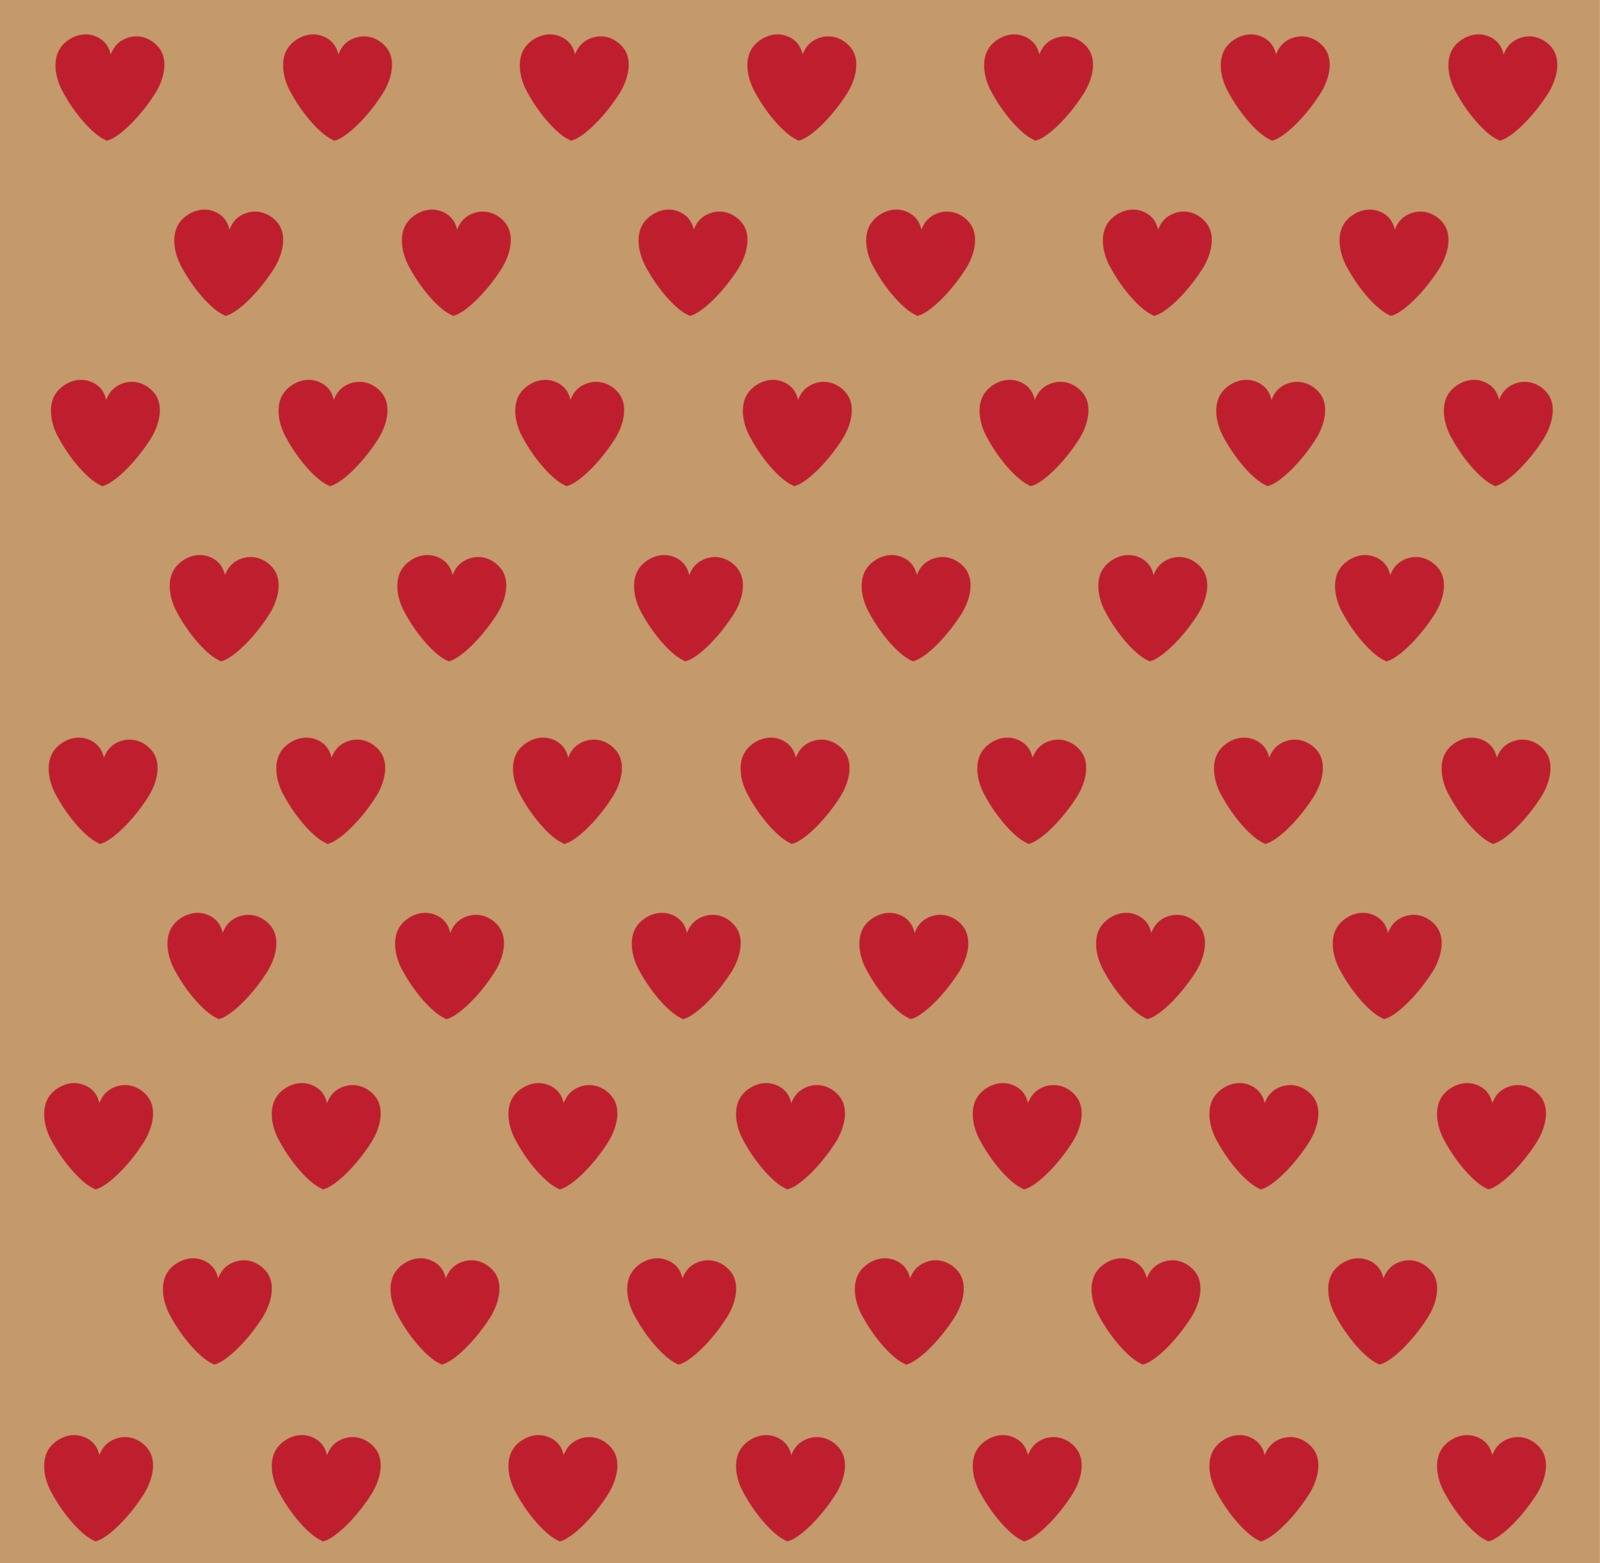 Polka dot hearts by Lilac